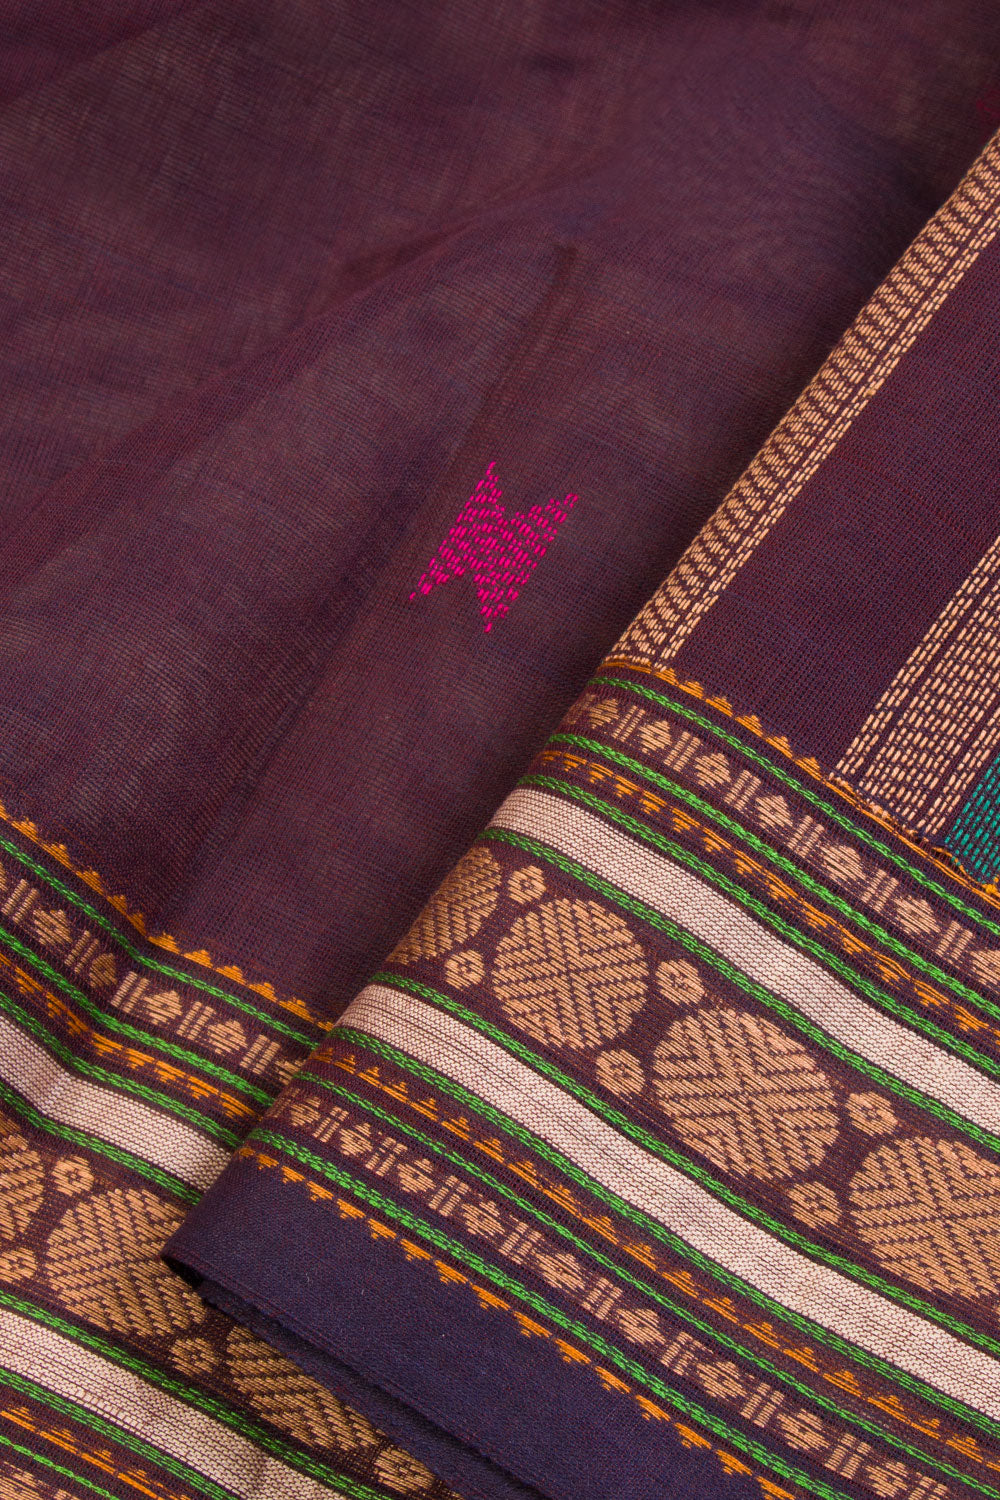 Brown Handwoven Kanchi Cotton Saree 10069239 - Avishya